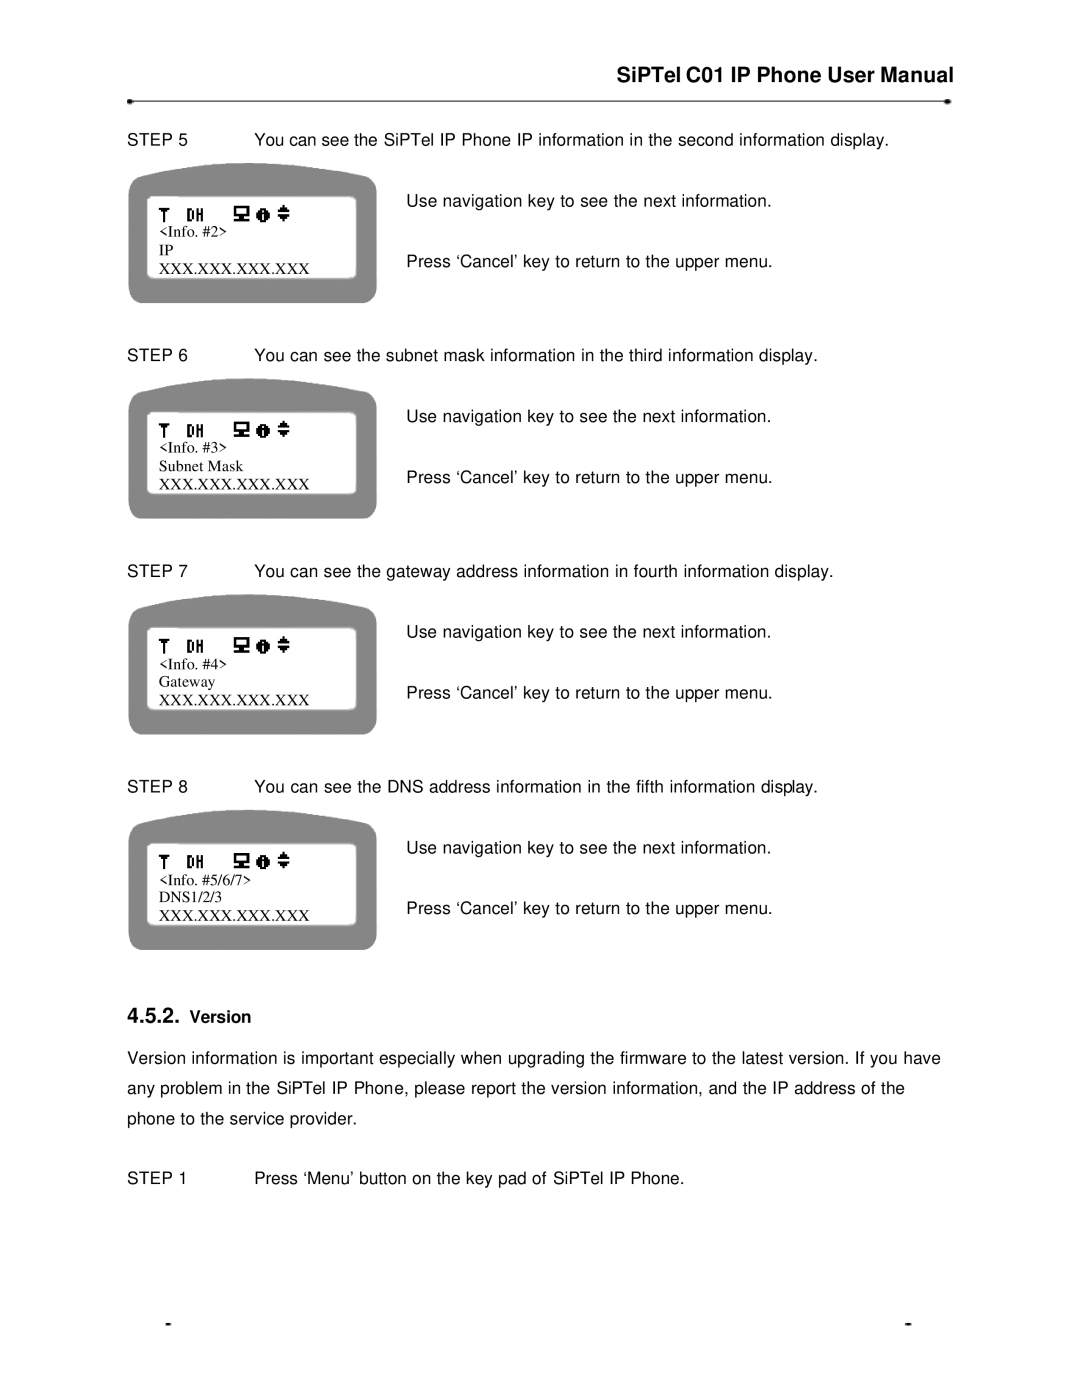 Samsung C01 user manual Version 